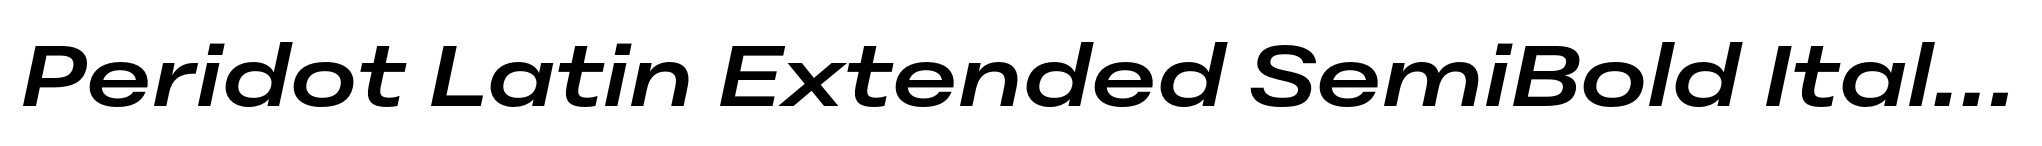 Peridot Latin Extended SemiBold Italic image